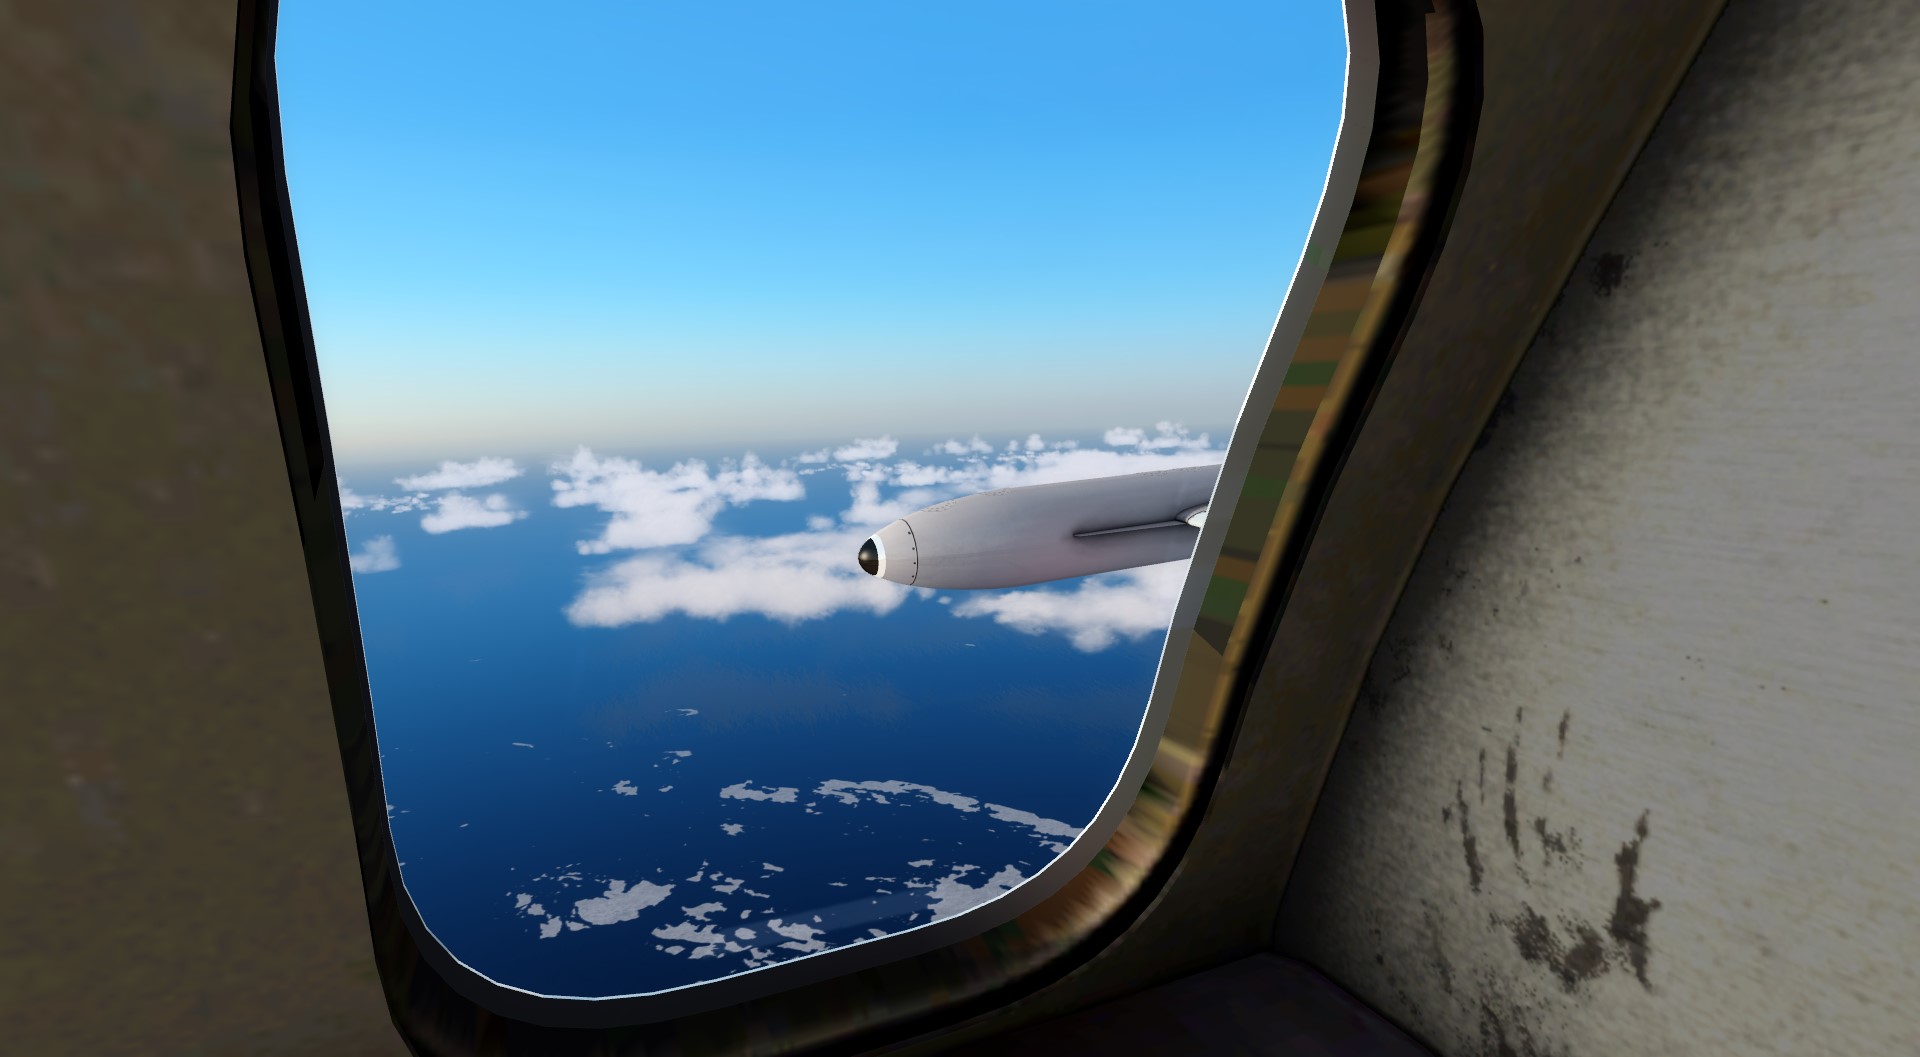 Flysimware – Learjet 35A 评测与冰岛送货之旅-6503 